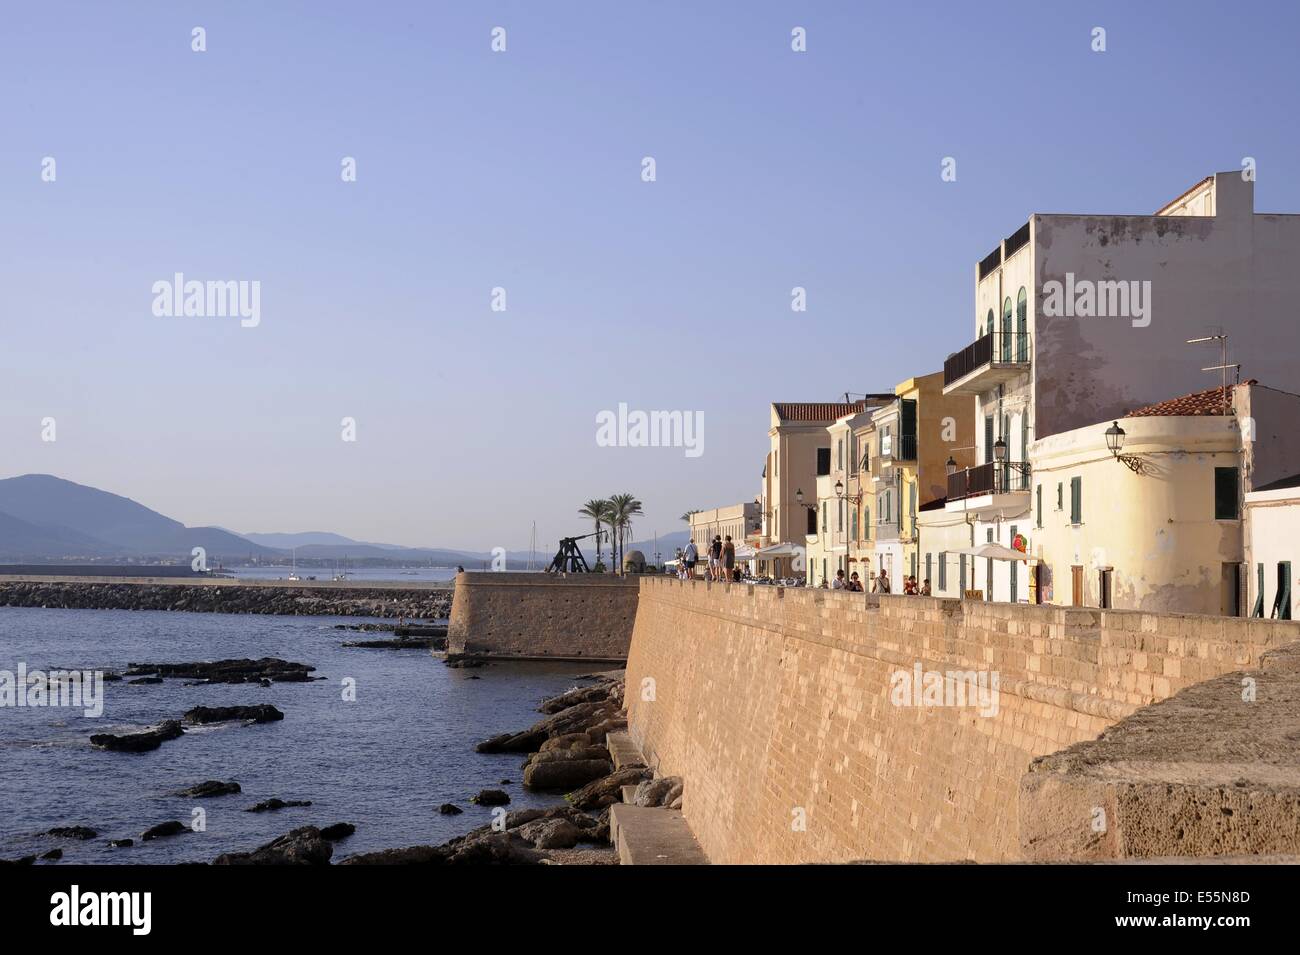 Italy, Sardinia island, Alghero, the old city and medieval walls Stock Photo